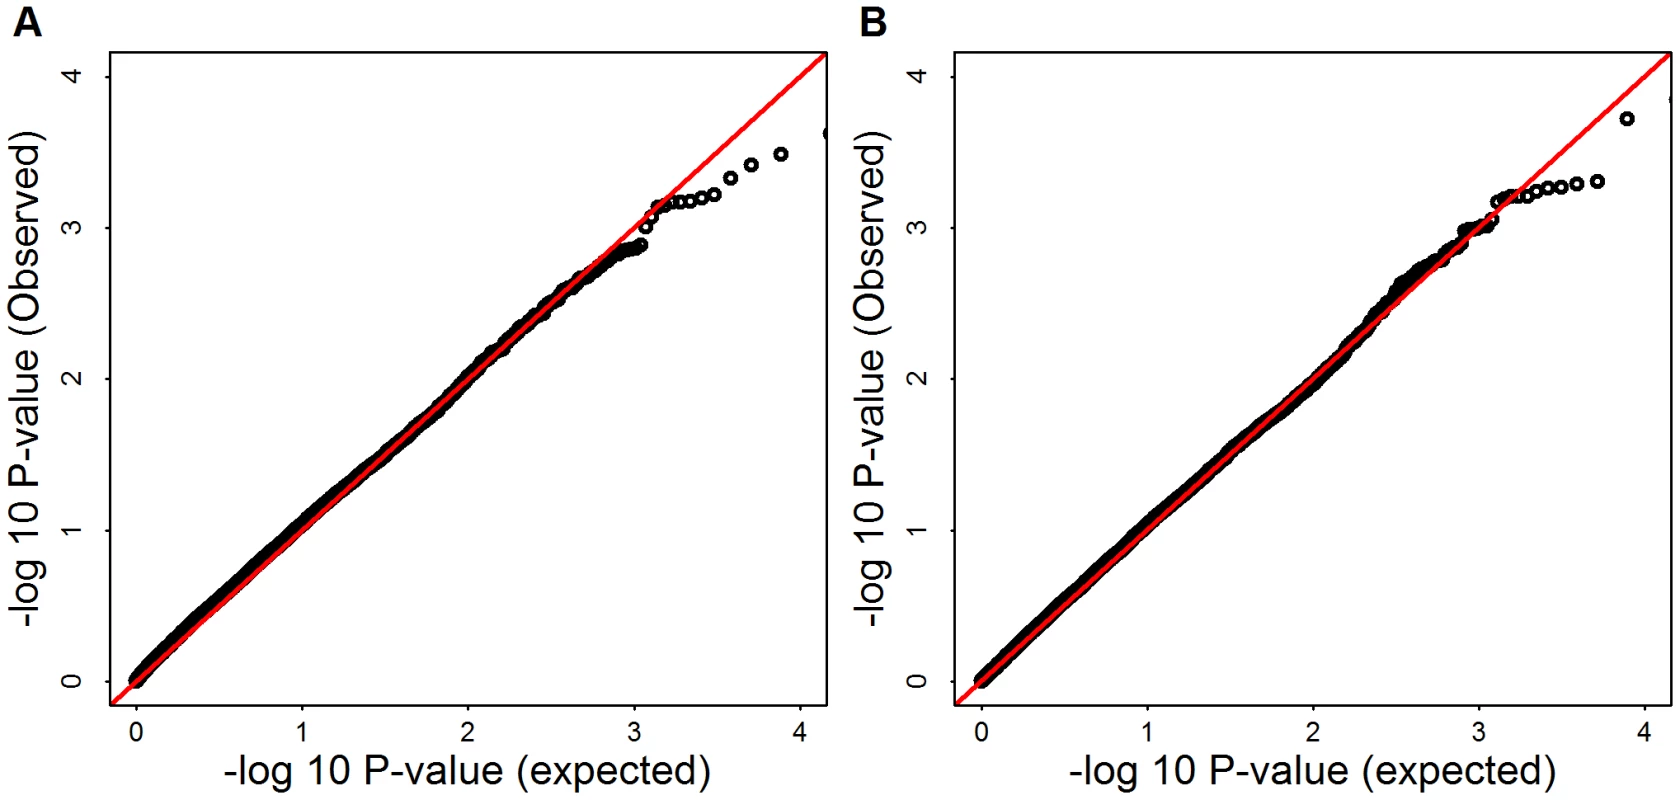 -log10(observed p-values) versus -log10(expected p-values) of SKAT and Burden test for Mega-analysis.